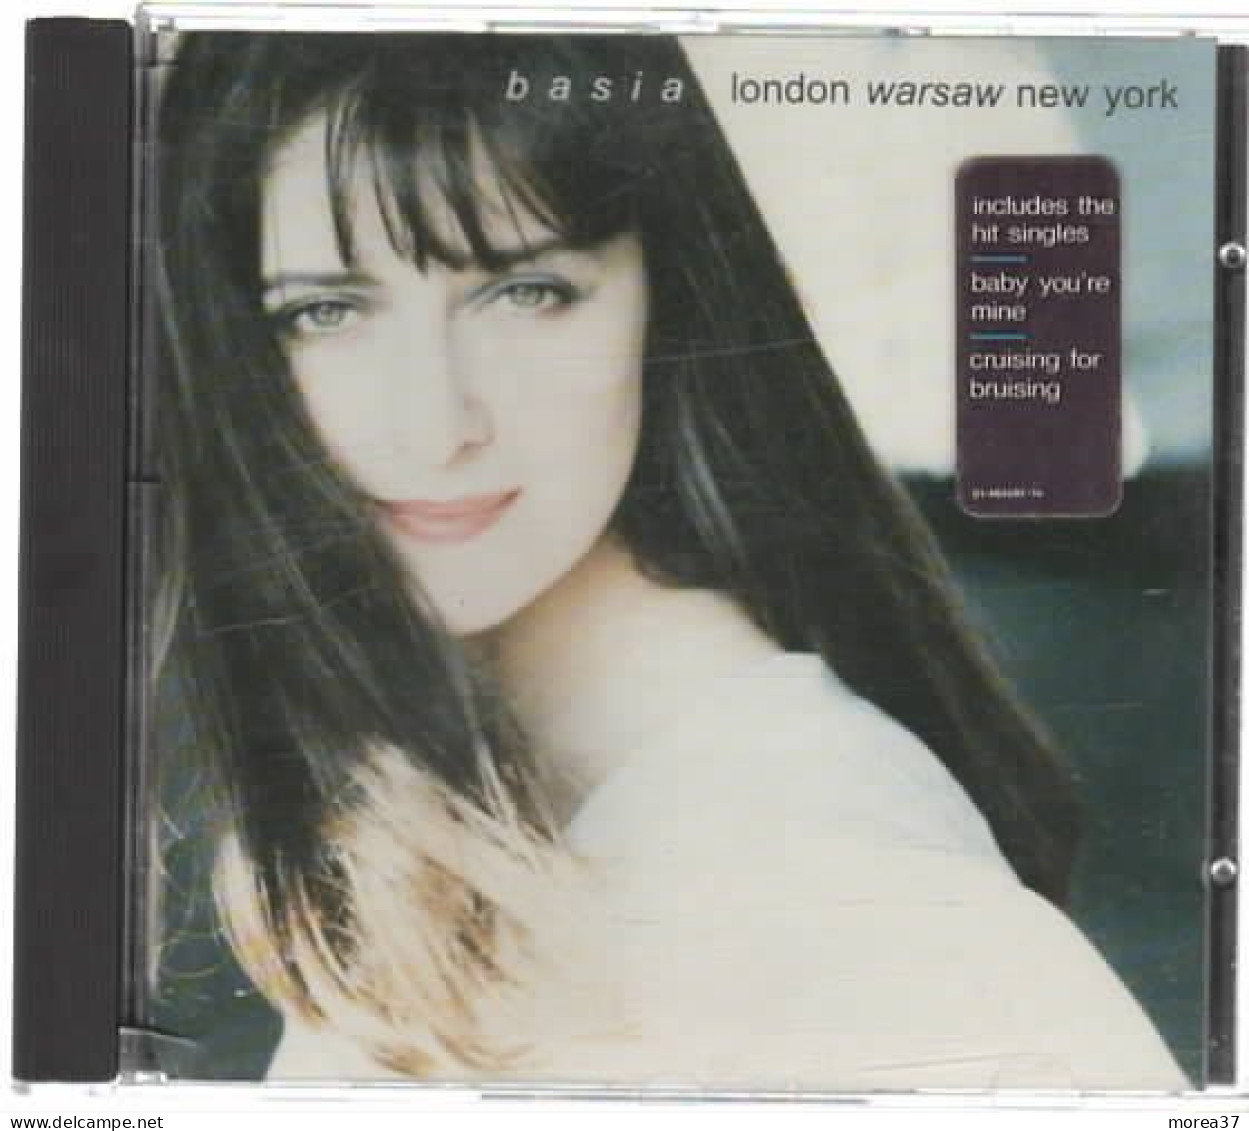 BASIA London Warsaw New YorK - Other - English Music